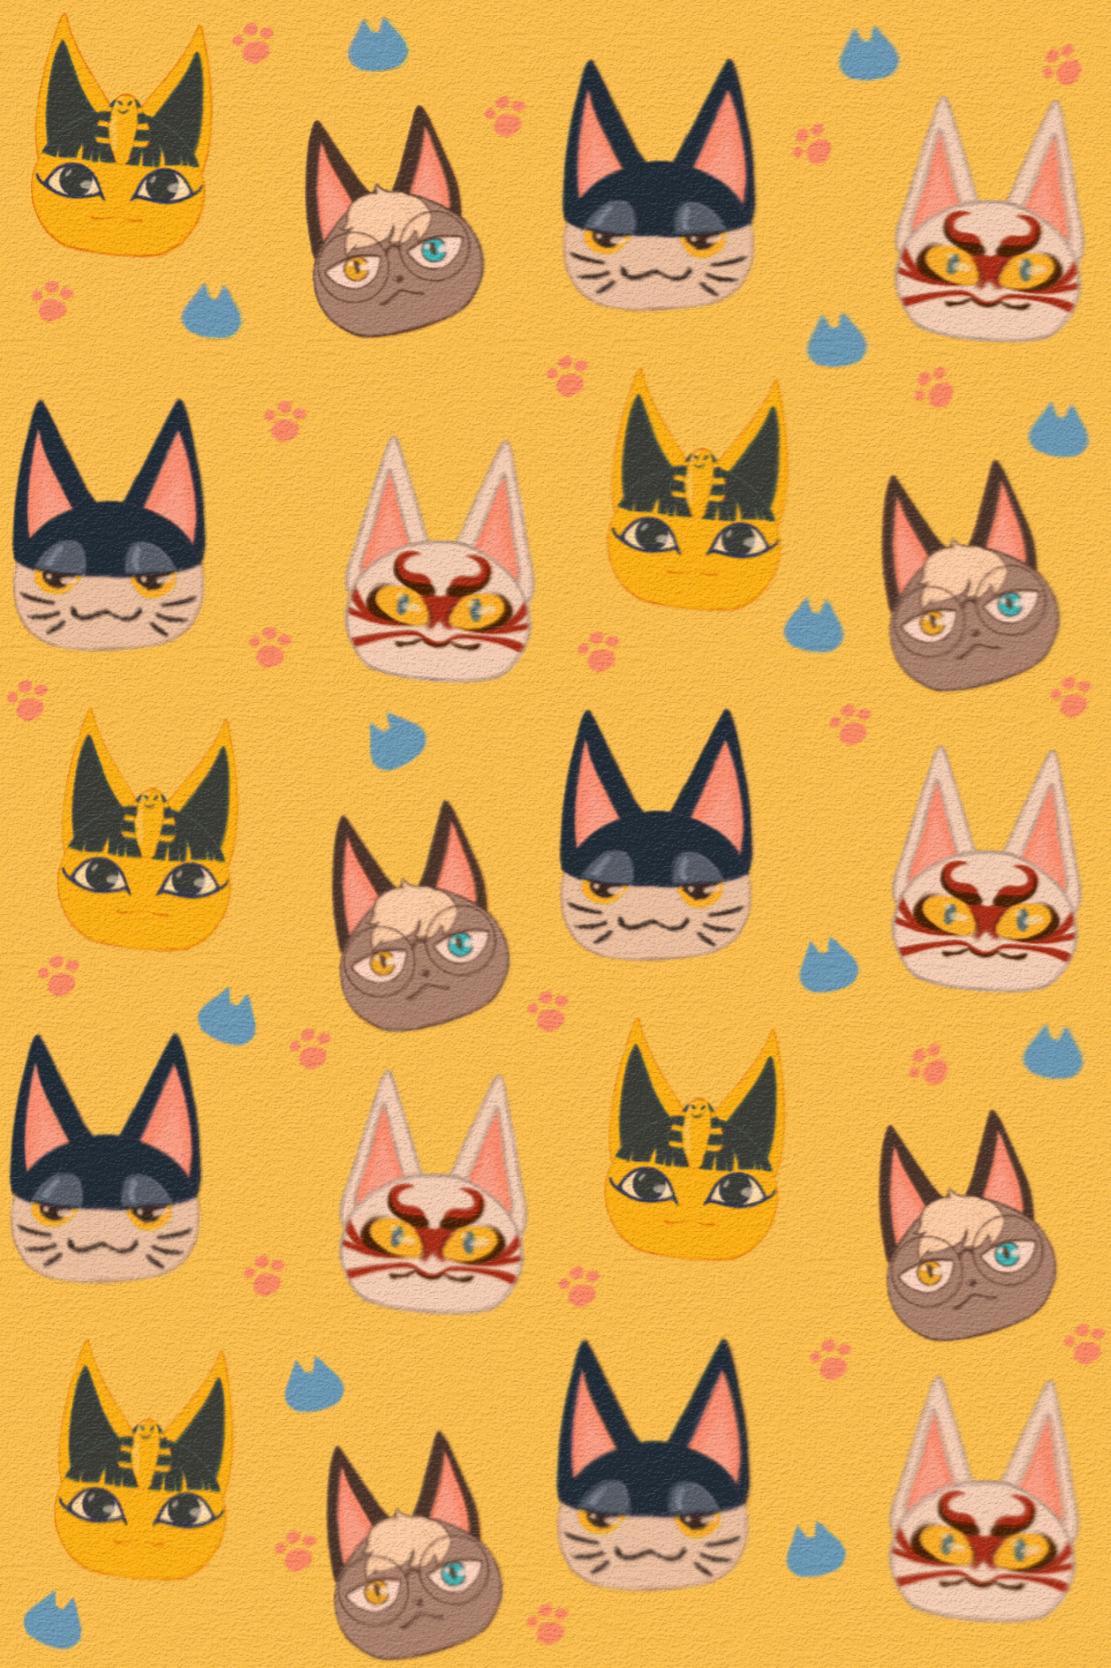 Background Animal Crossing Wallpaper